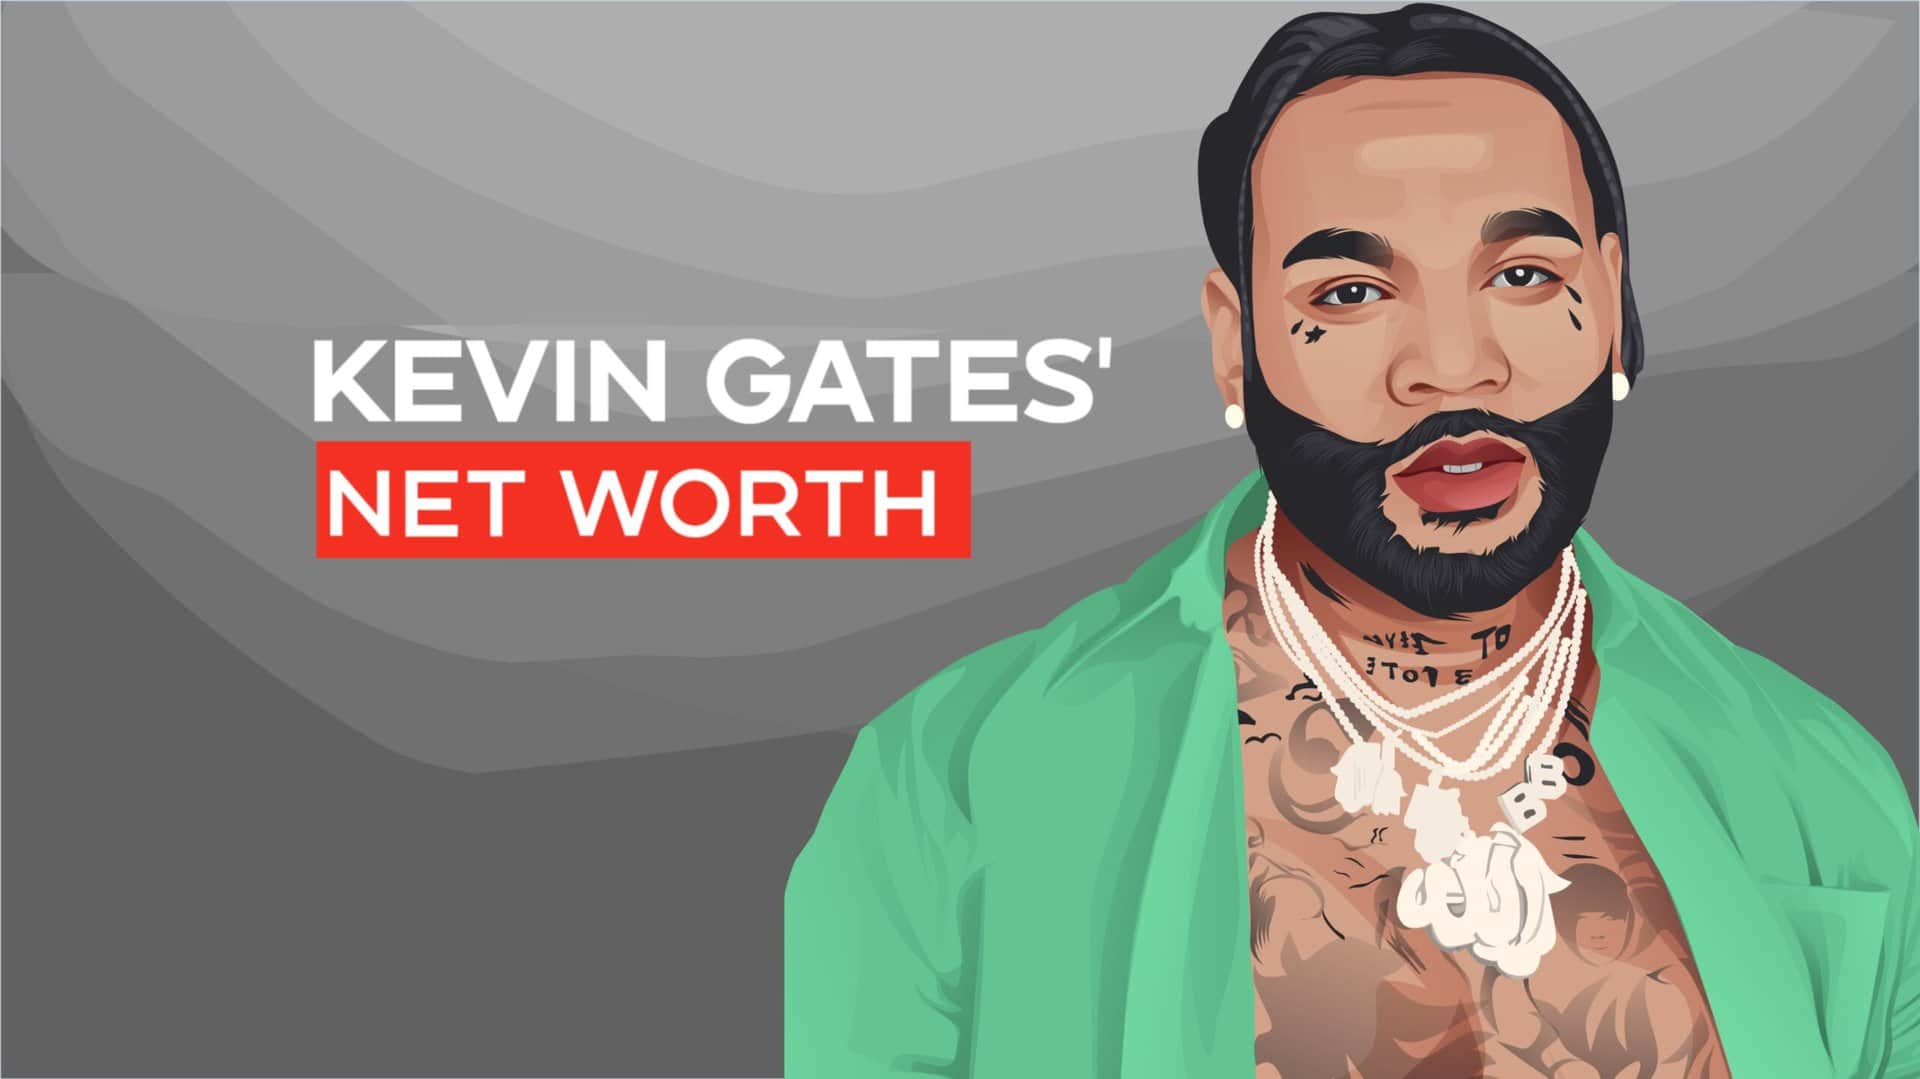 Kevin Gates' net worth